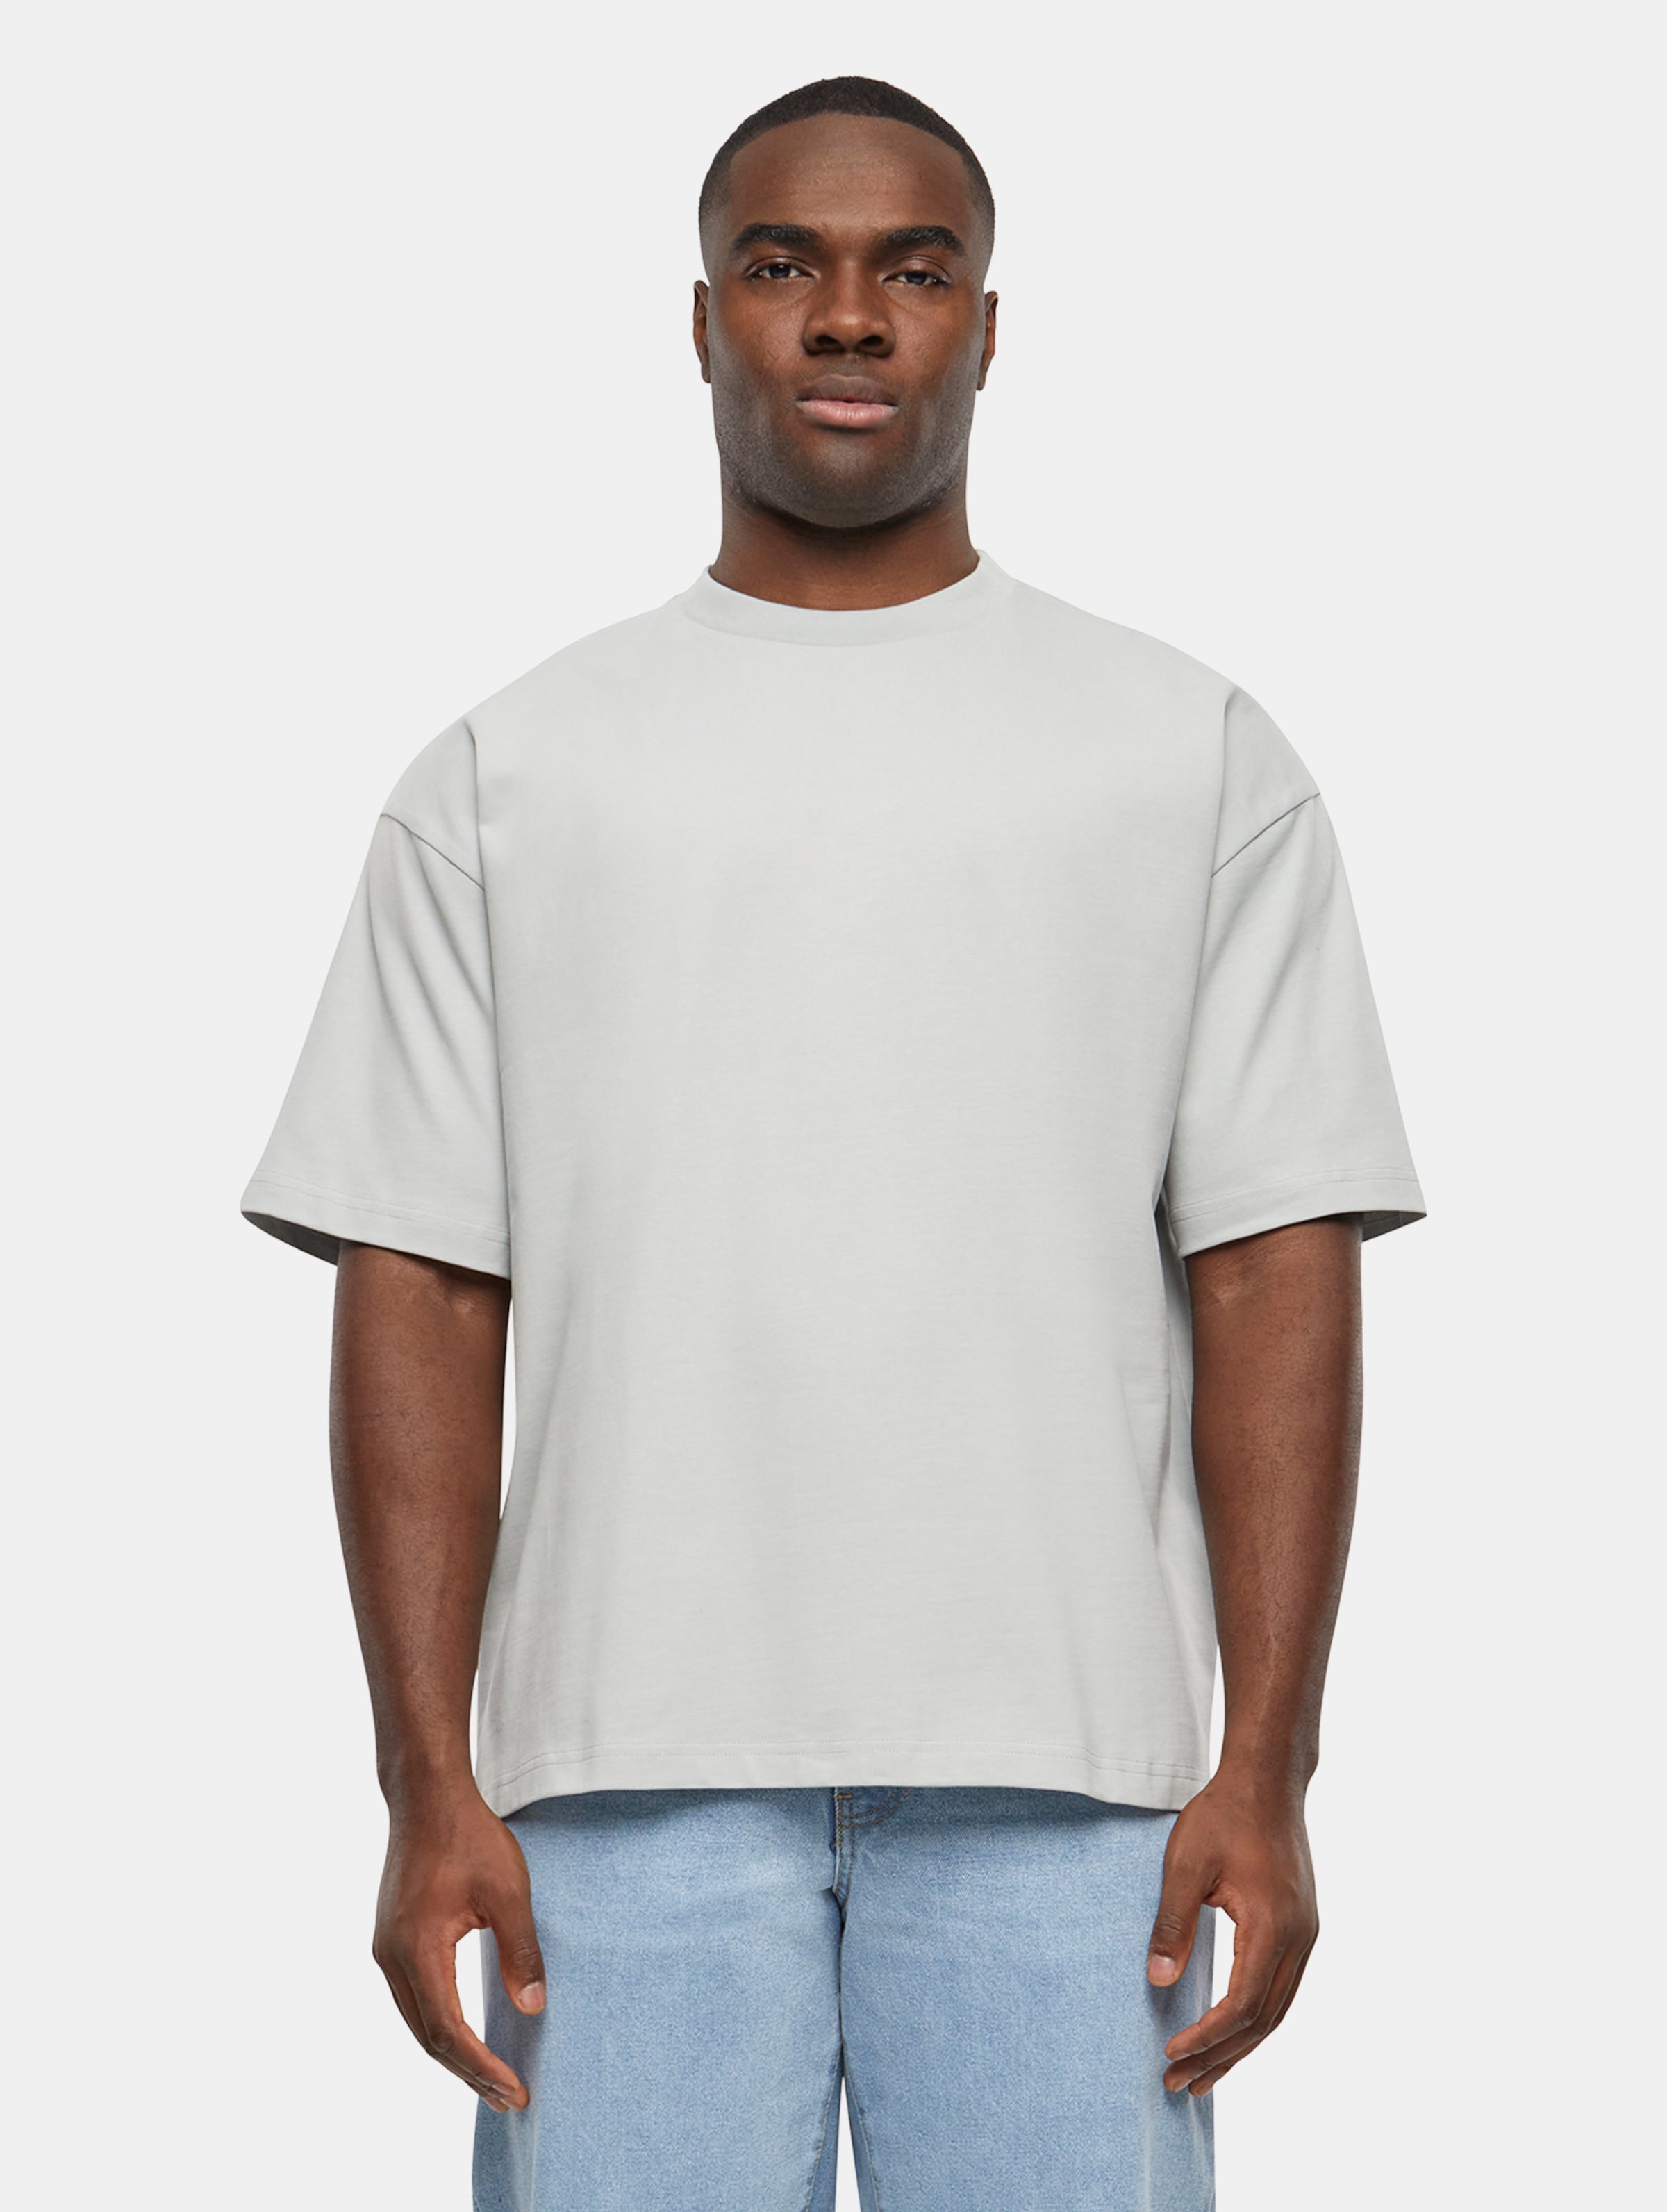 Prohibited Oversized T-Shirts Männer,Unisex op kleur grijs, Maat M